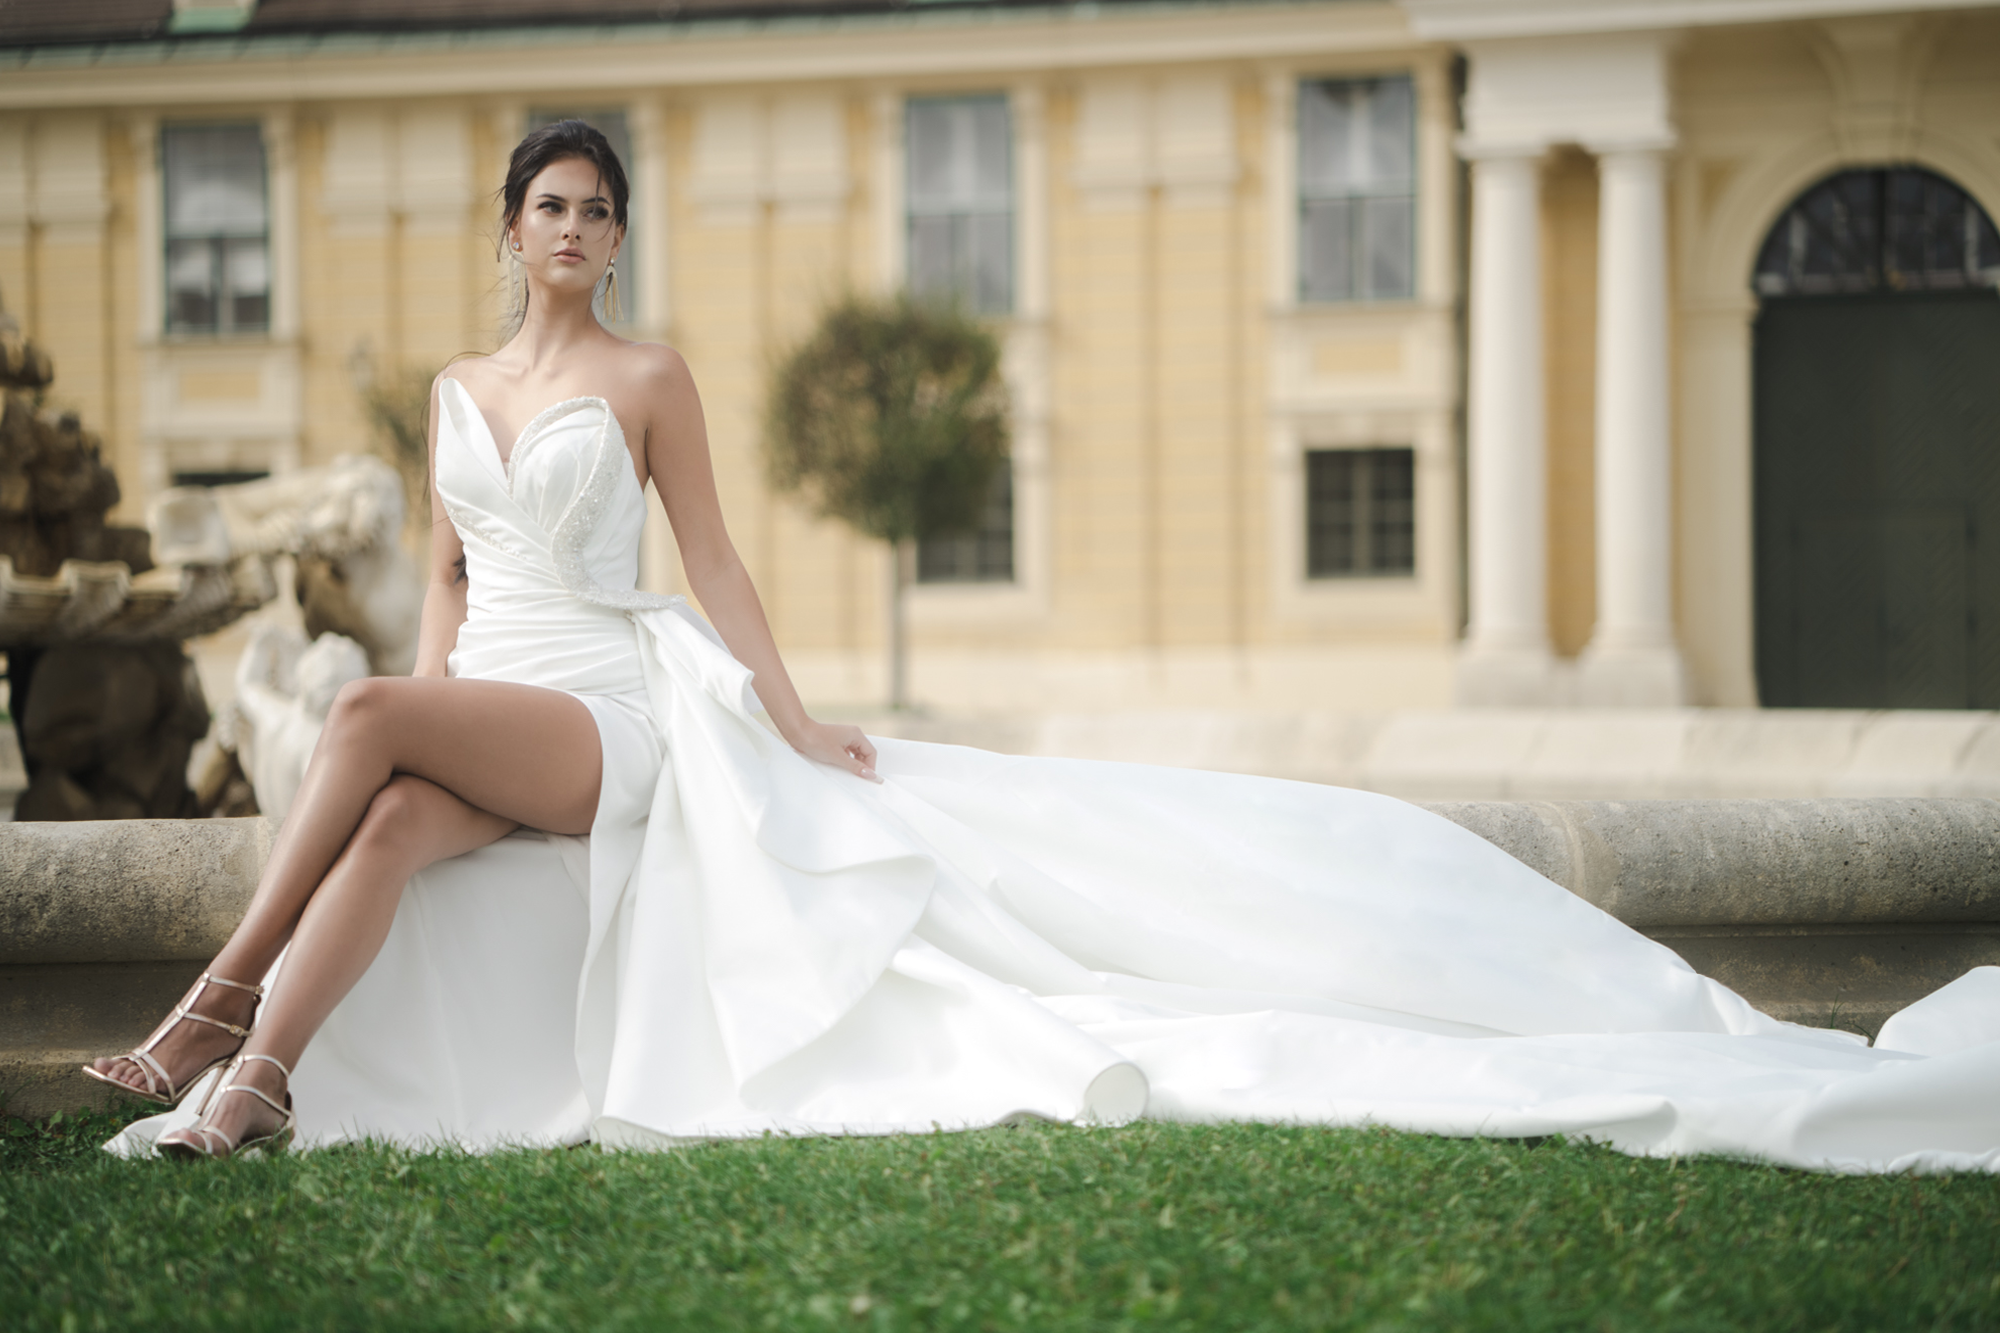 Emma - Strapless Sheath Dress with Side Slit and a Detachable Train - Maxima Bridal